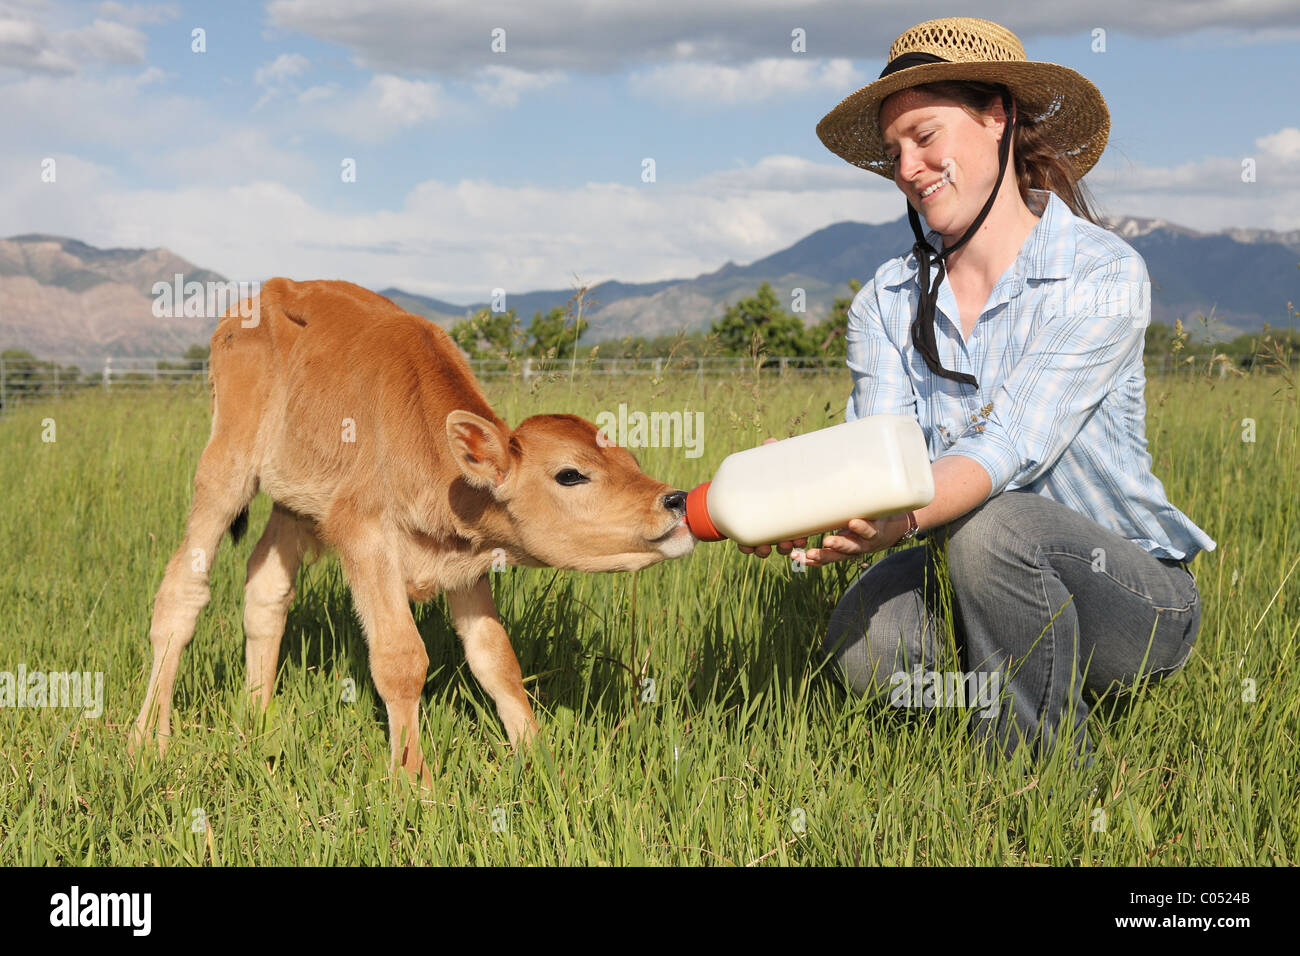 woman feeding milk bottle to cute baby cow Stock Photo